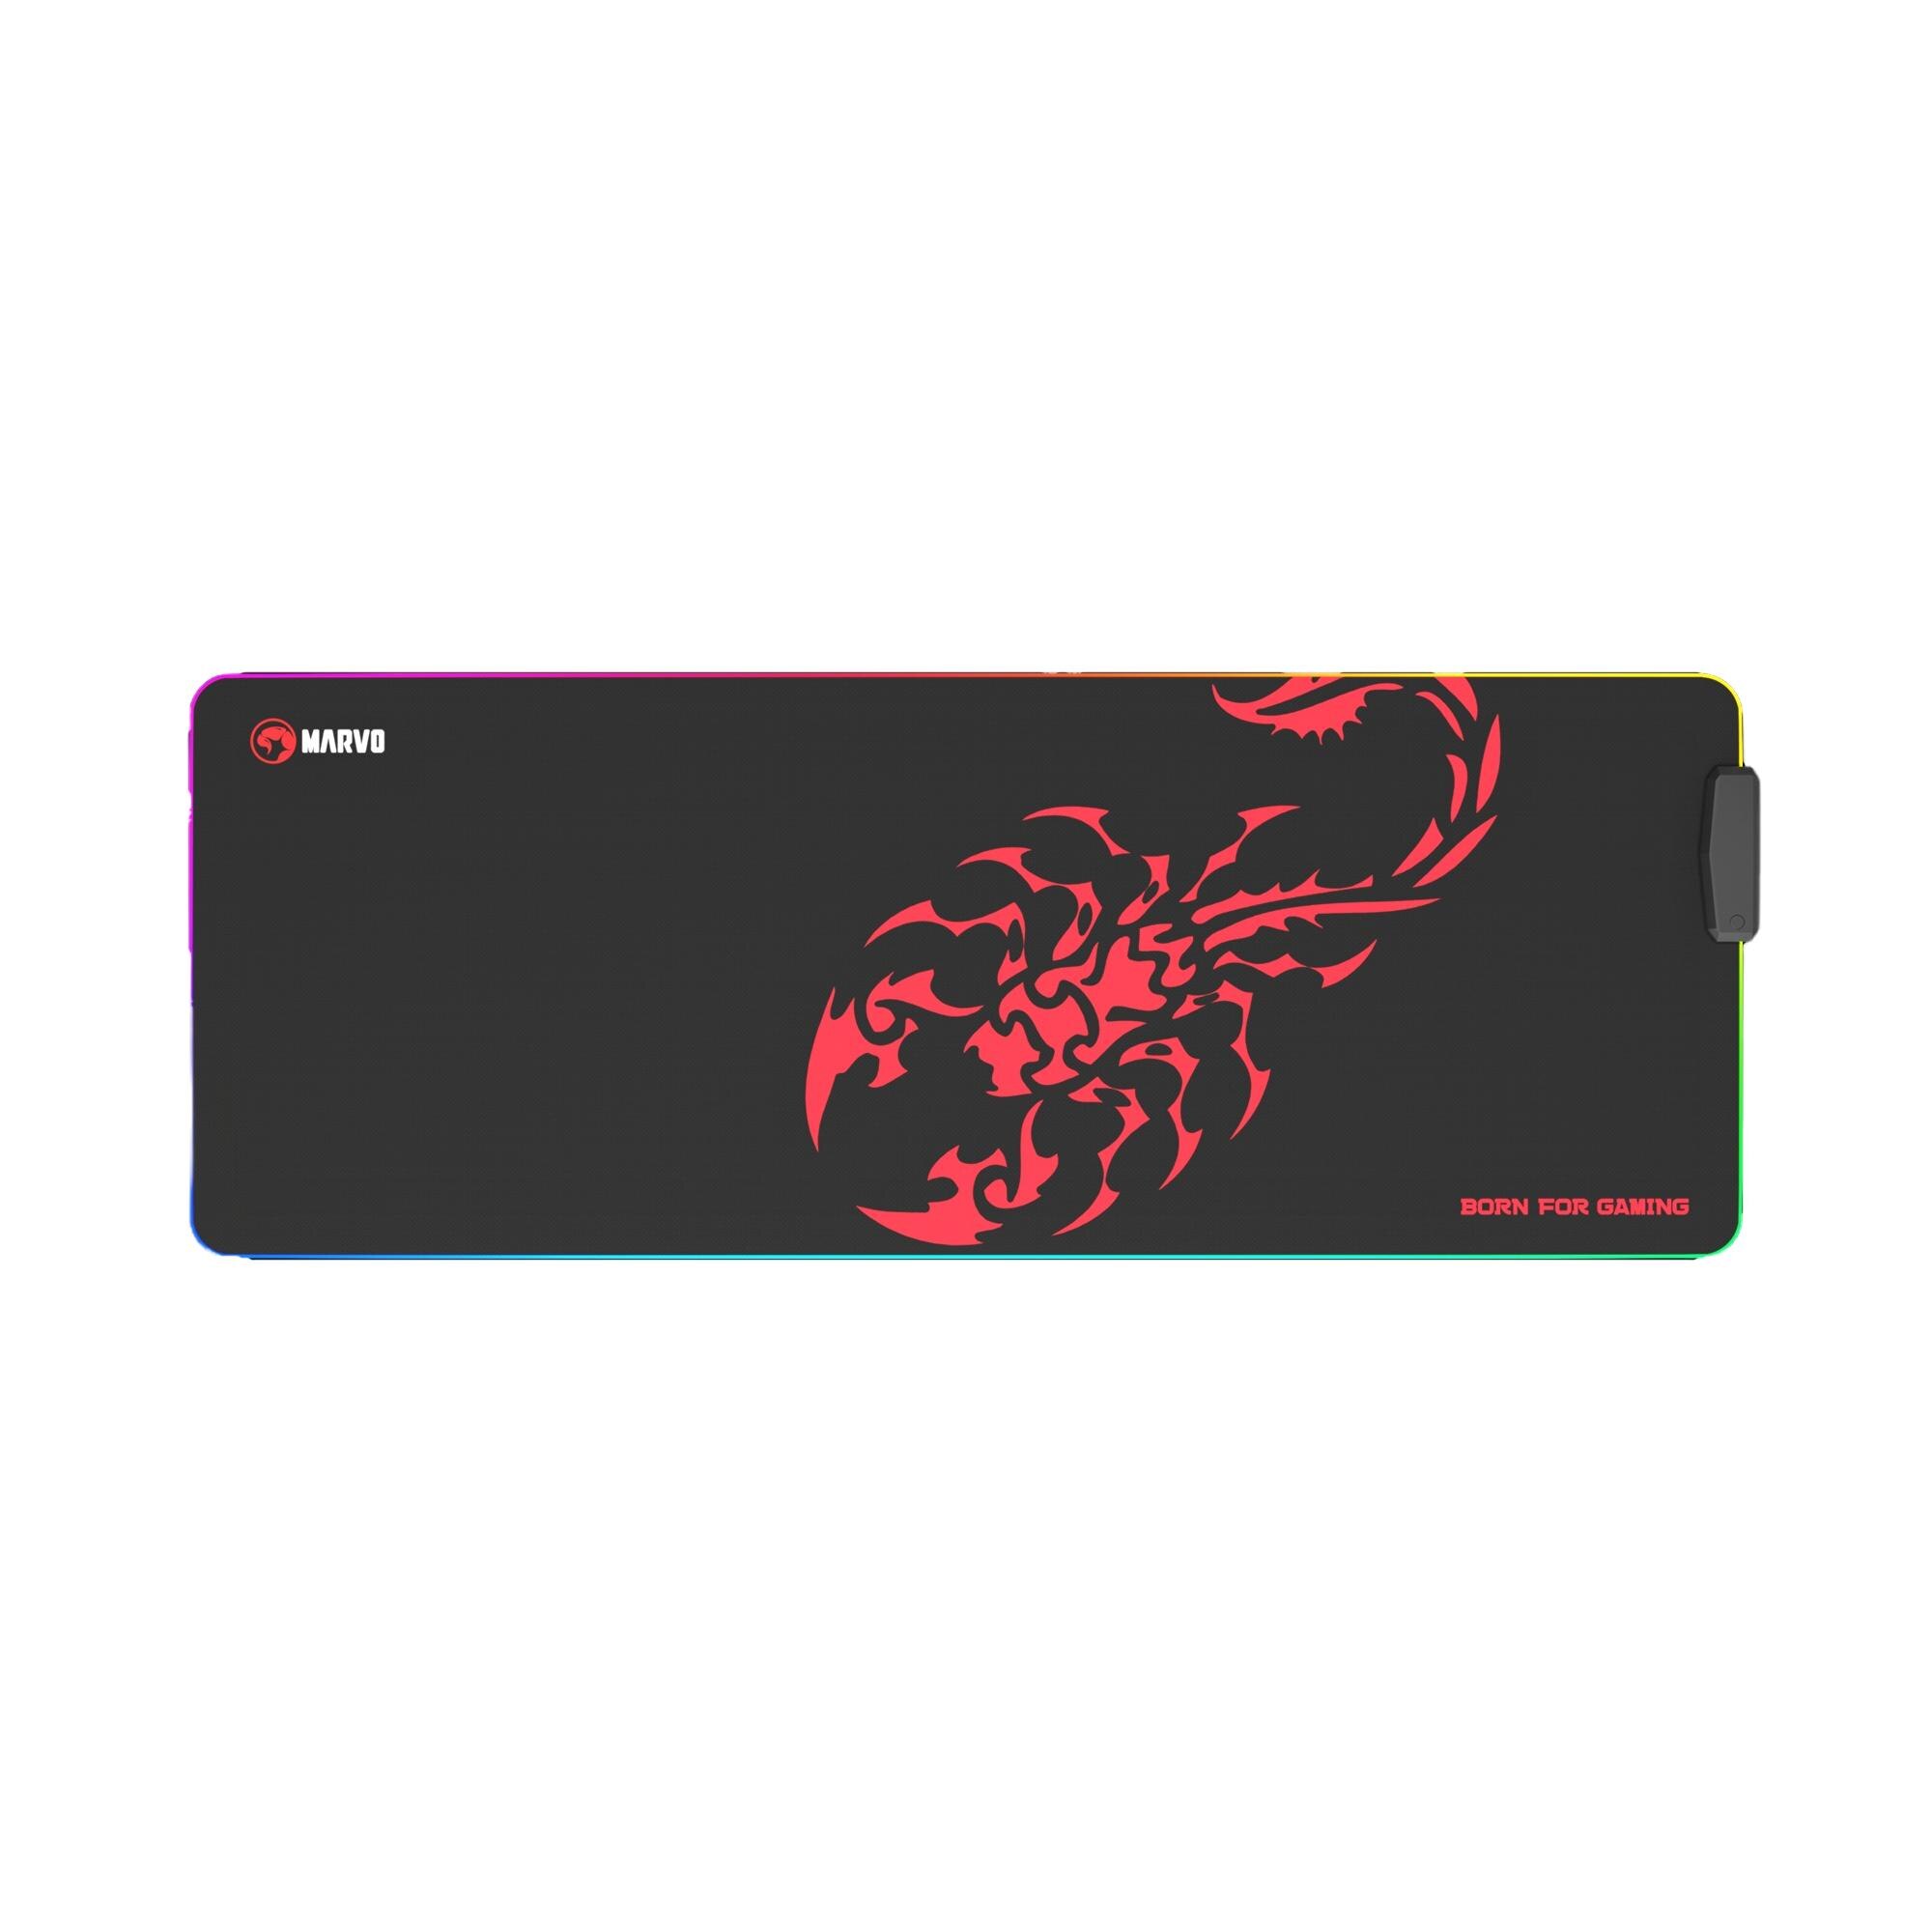 Mouse Pad gaming HautStore, RGB, LED, Baza din cauciuc antiderapant, 800 x  300 x 4mm, Negru 